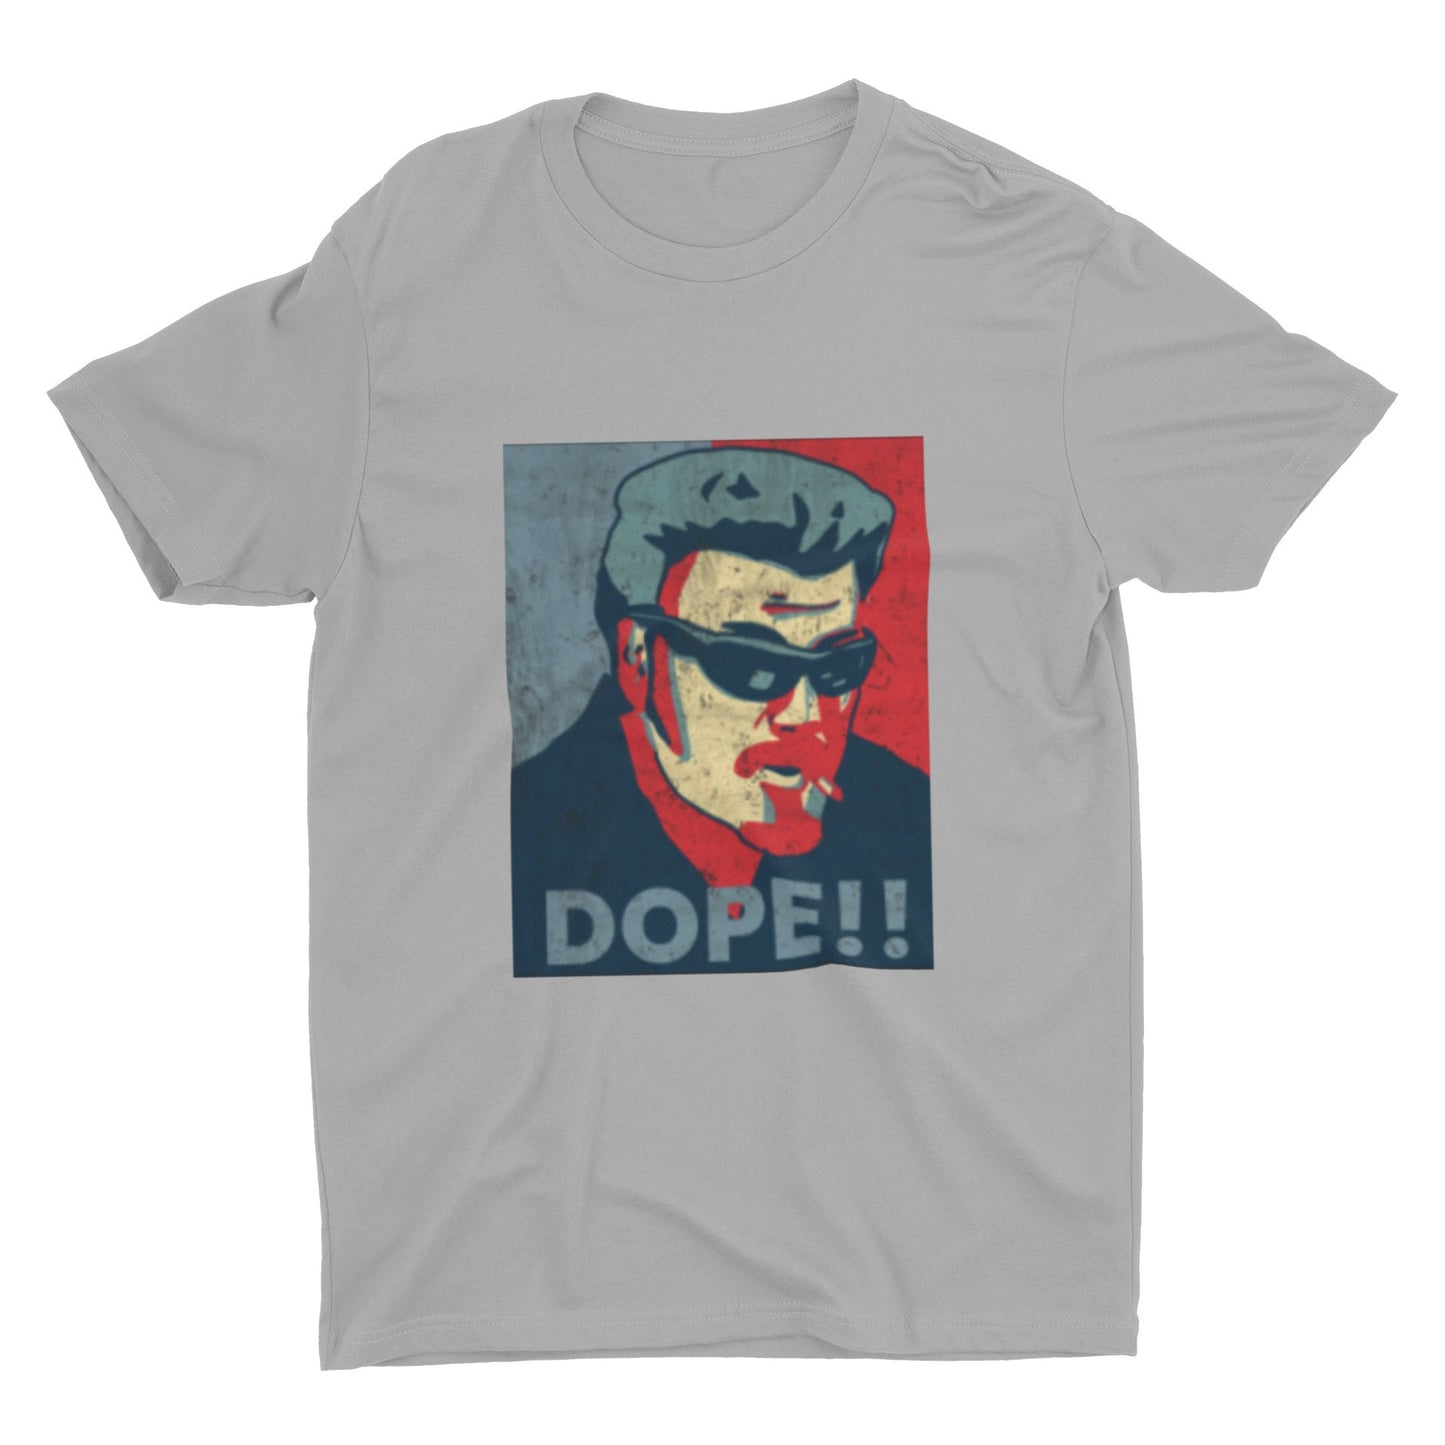 Ricky Dope T Shirt | Trailer Park Boys T Shirt | Sunnyvale Trailer Park